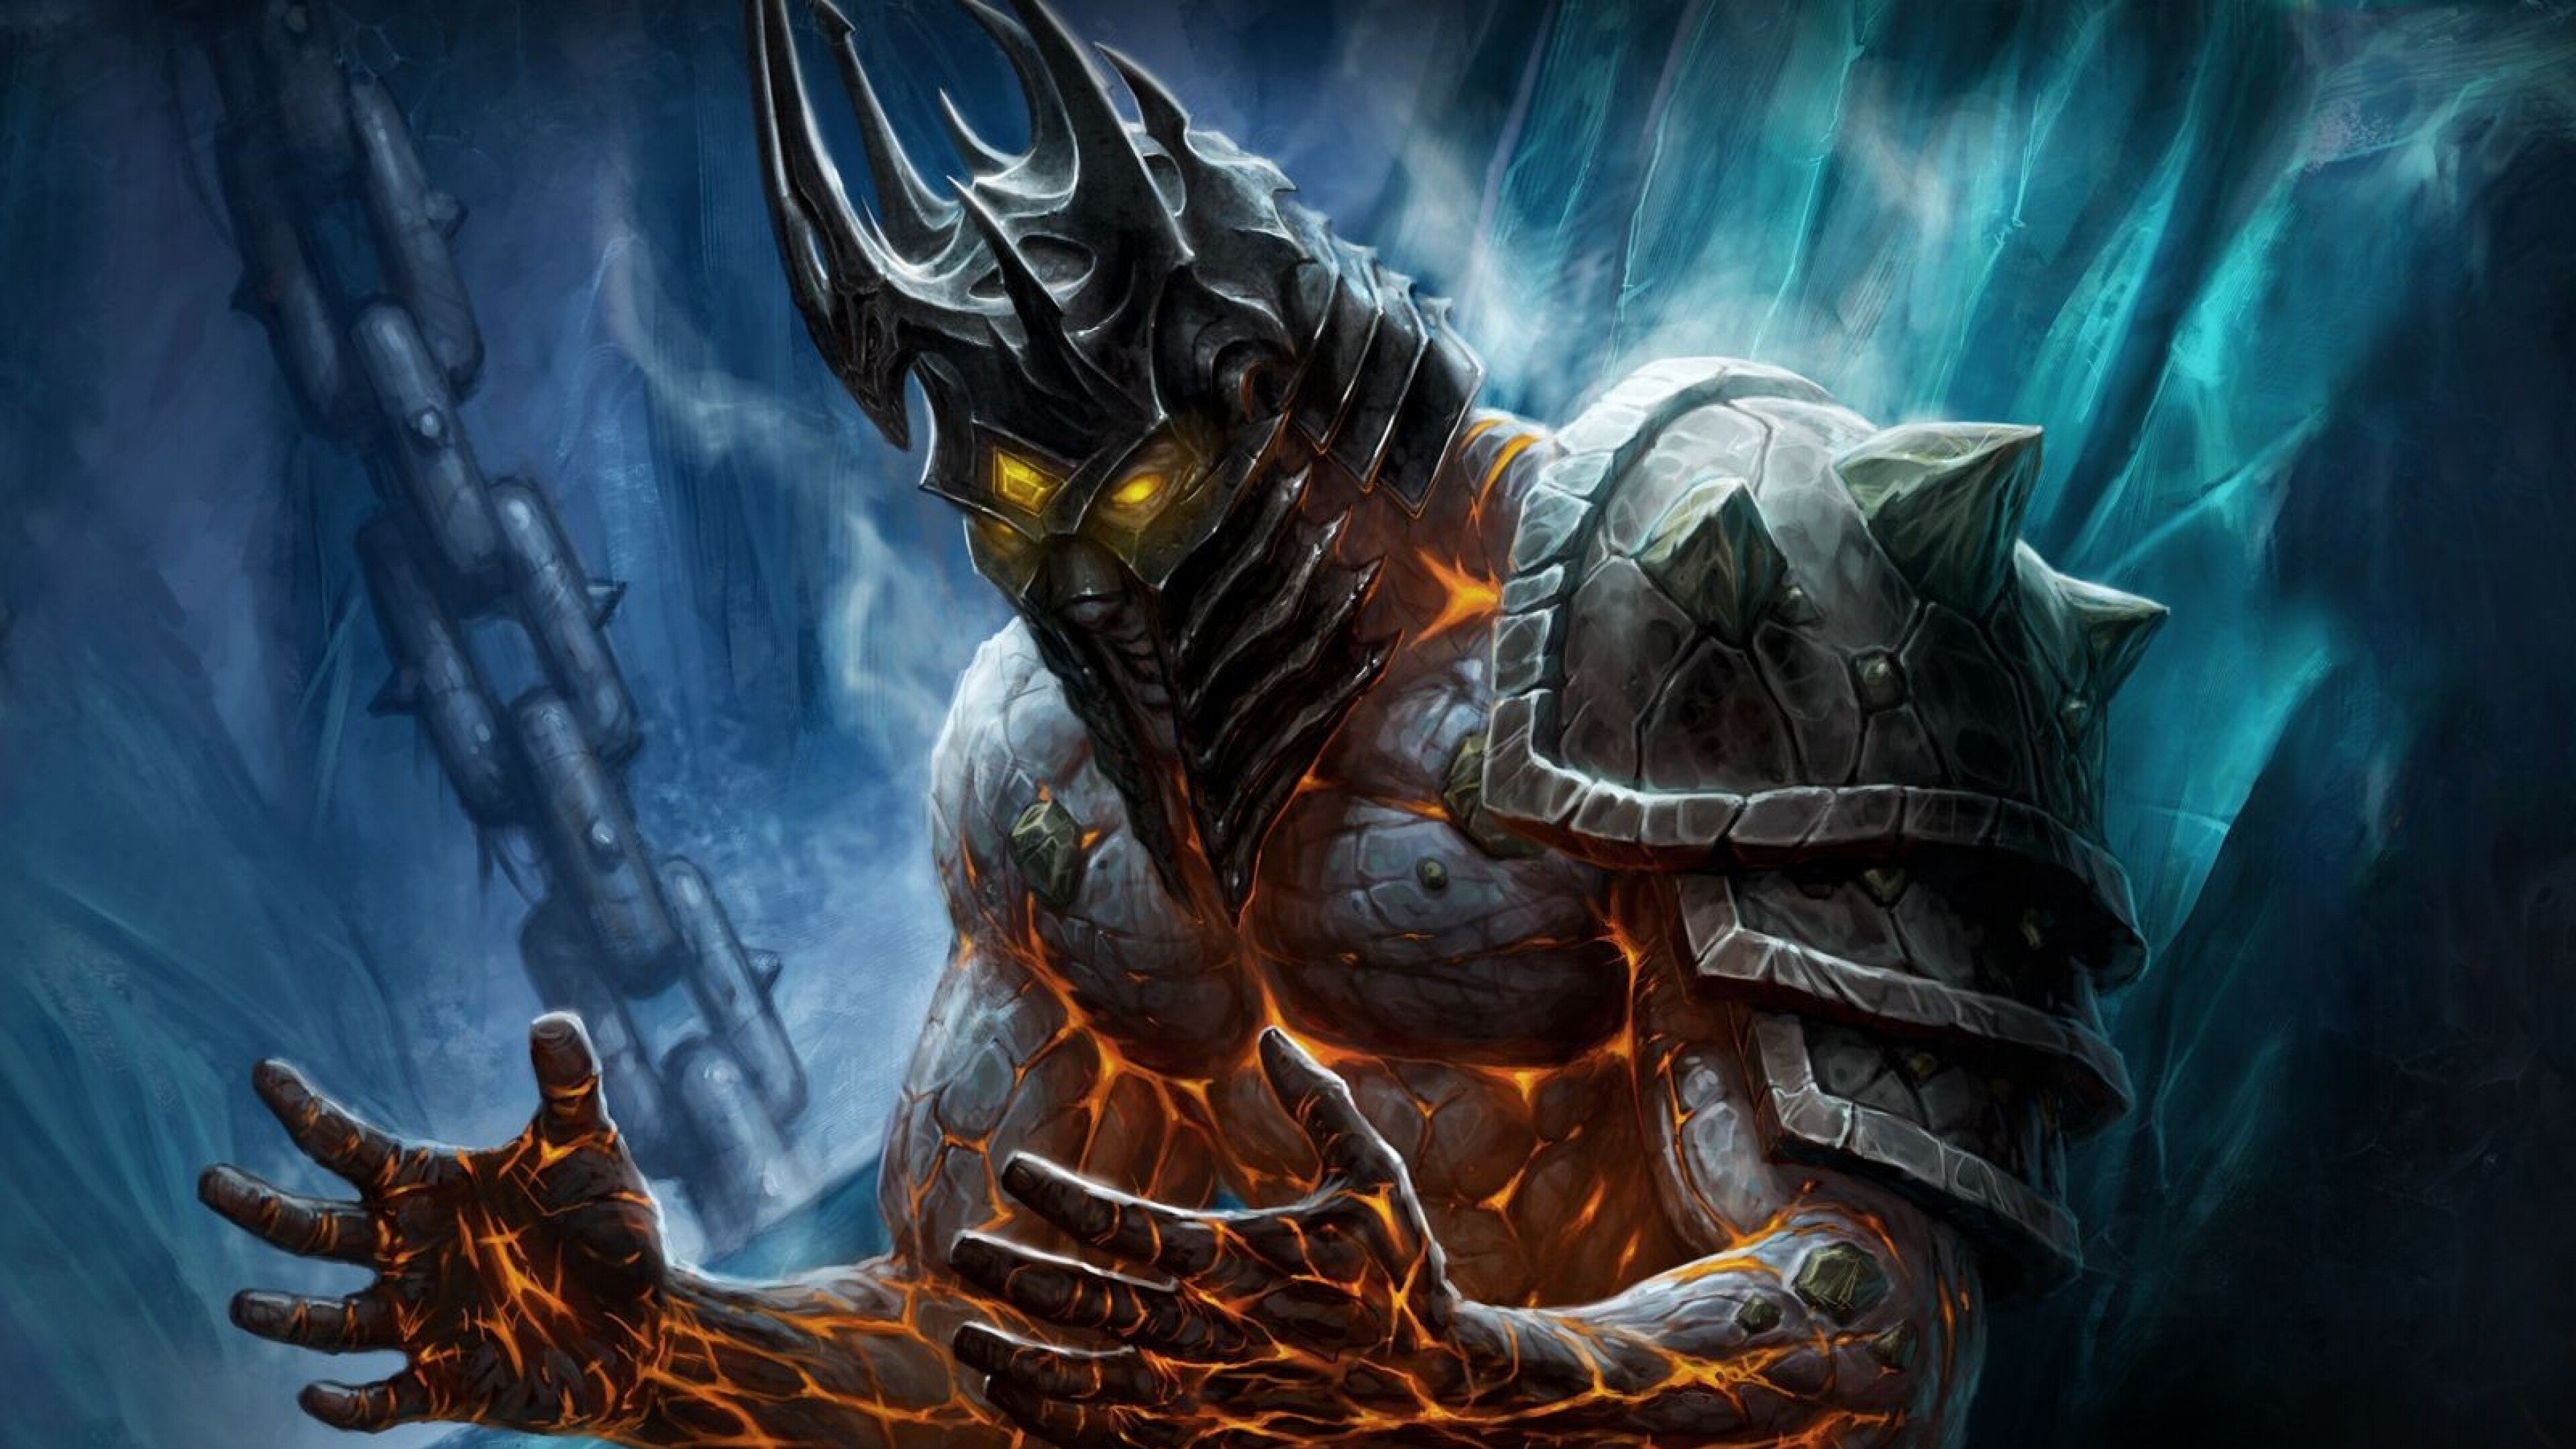 World of Warcraft: Bolvar Fordragon, The new Lich King, WoW. 3840x2160 4K Wallpaper.